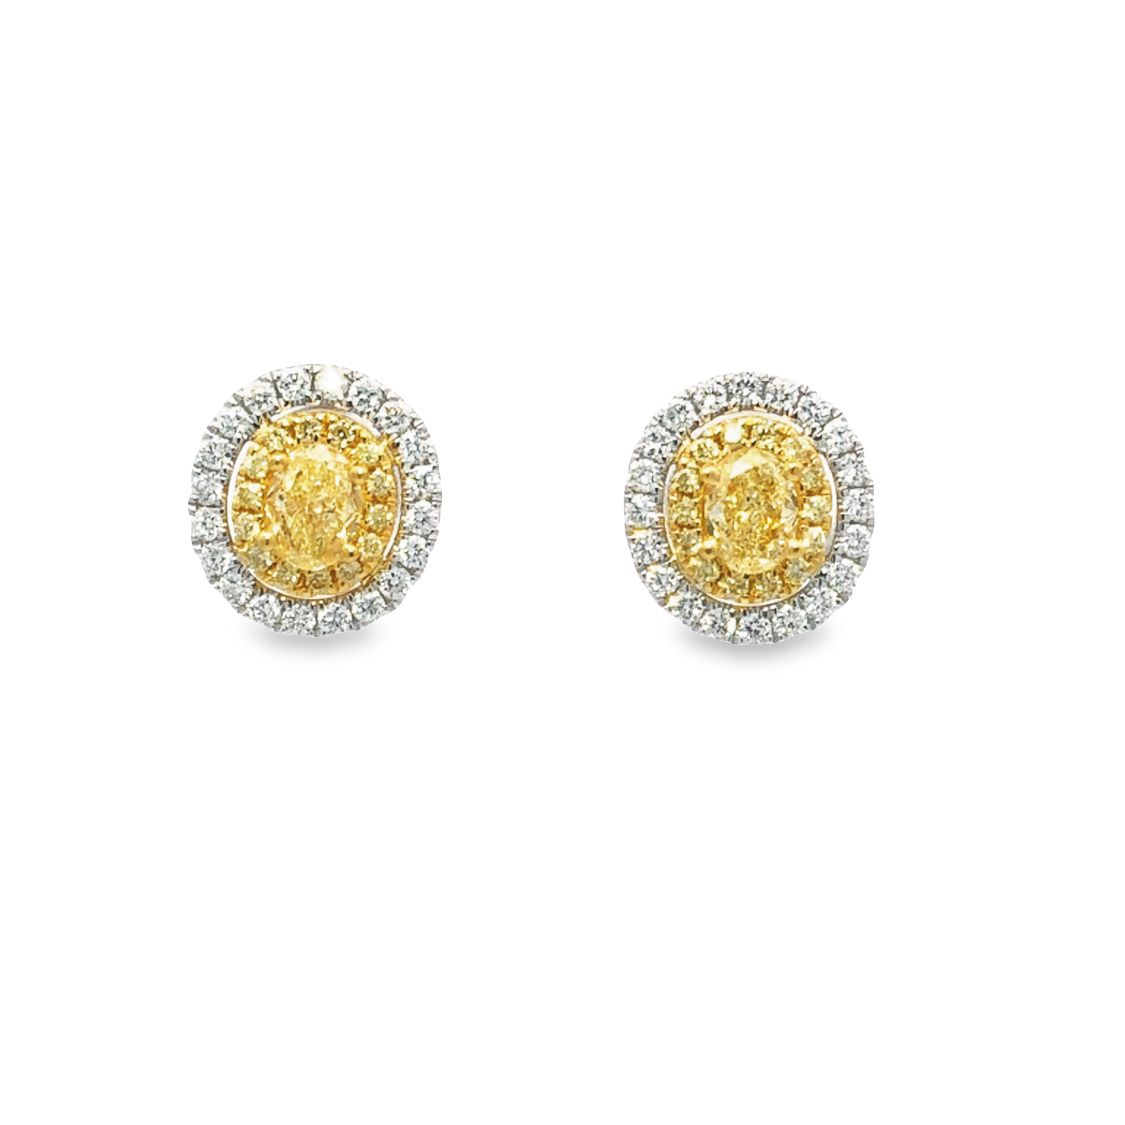 18K White and Yellow Gold Diamond Earrings